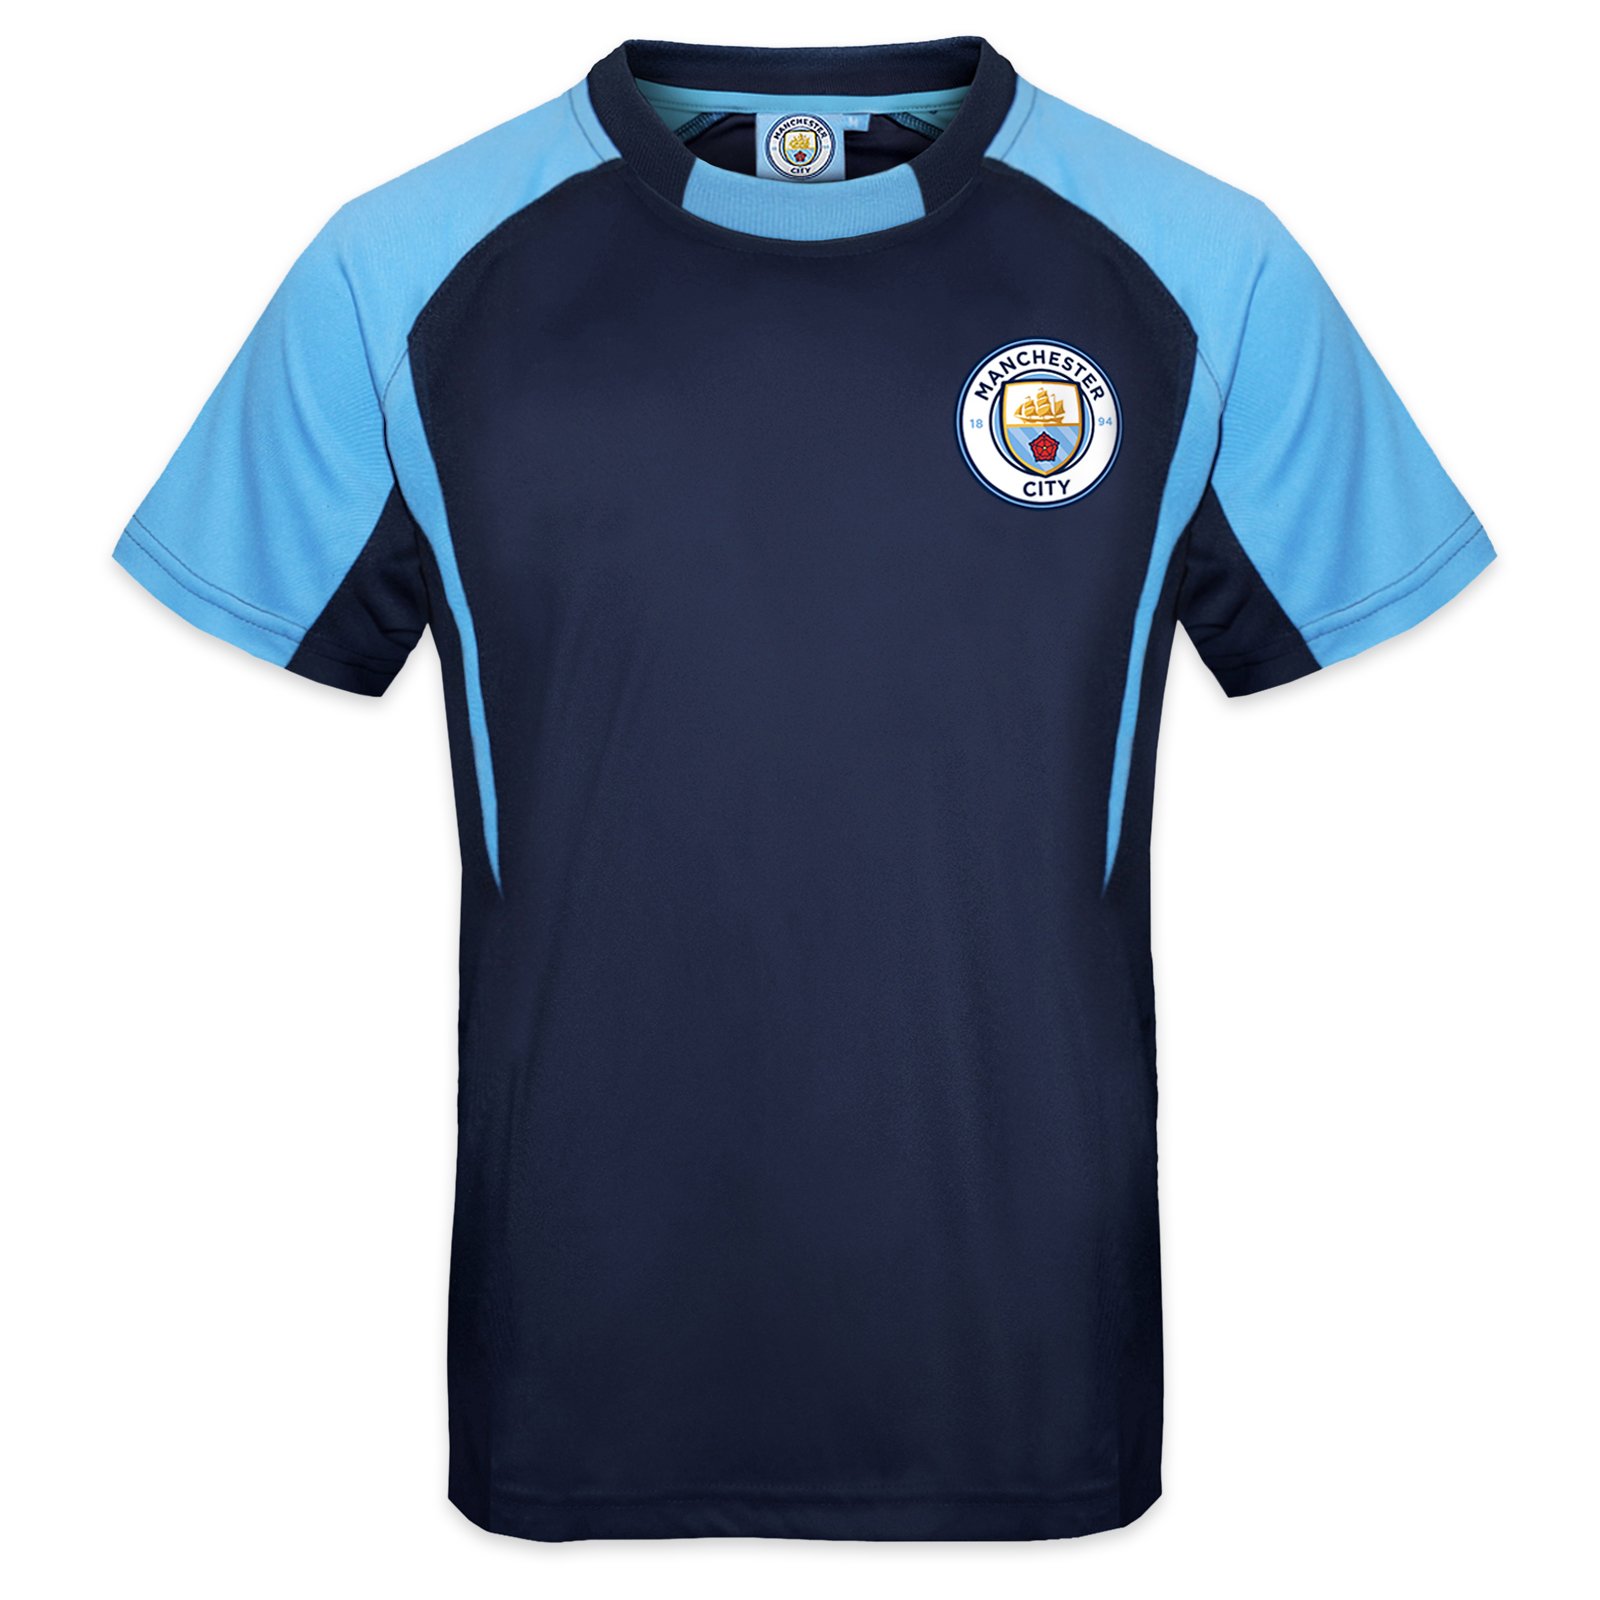 Manchester City FC Offizielles Kinder-Fußball-T-Shirt aus Polyester, Geschenk für Jungen Gr. 12-13 Jahre, Navy Blue Crest